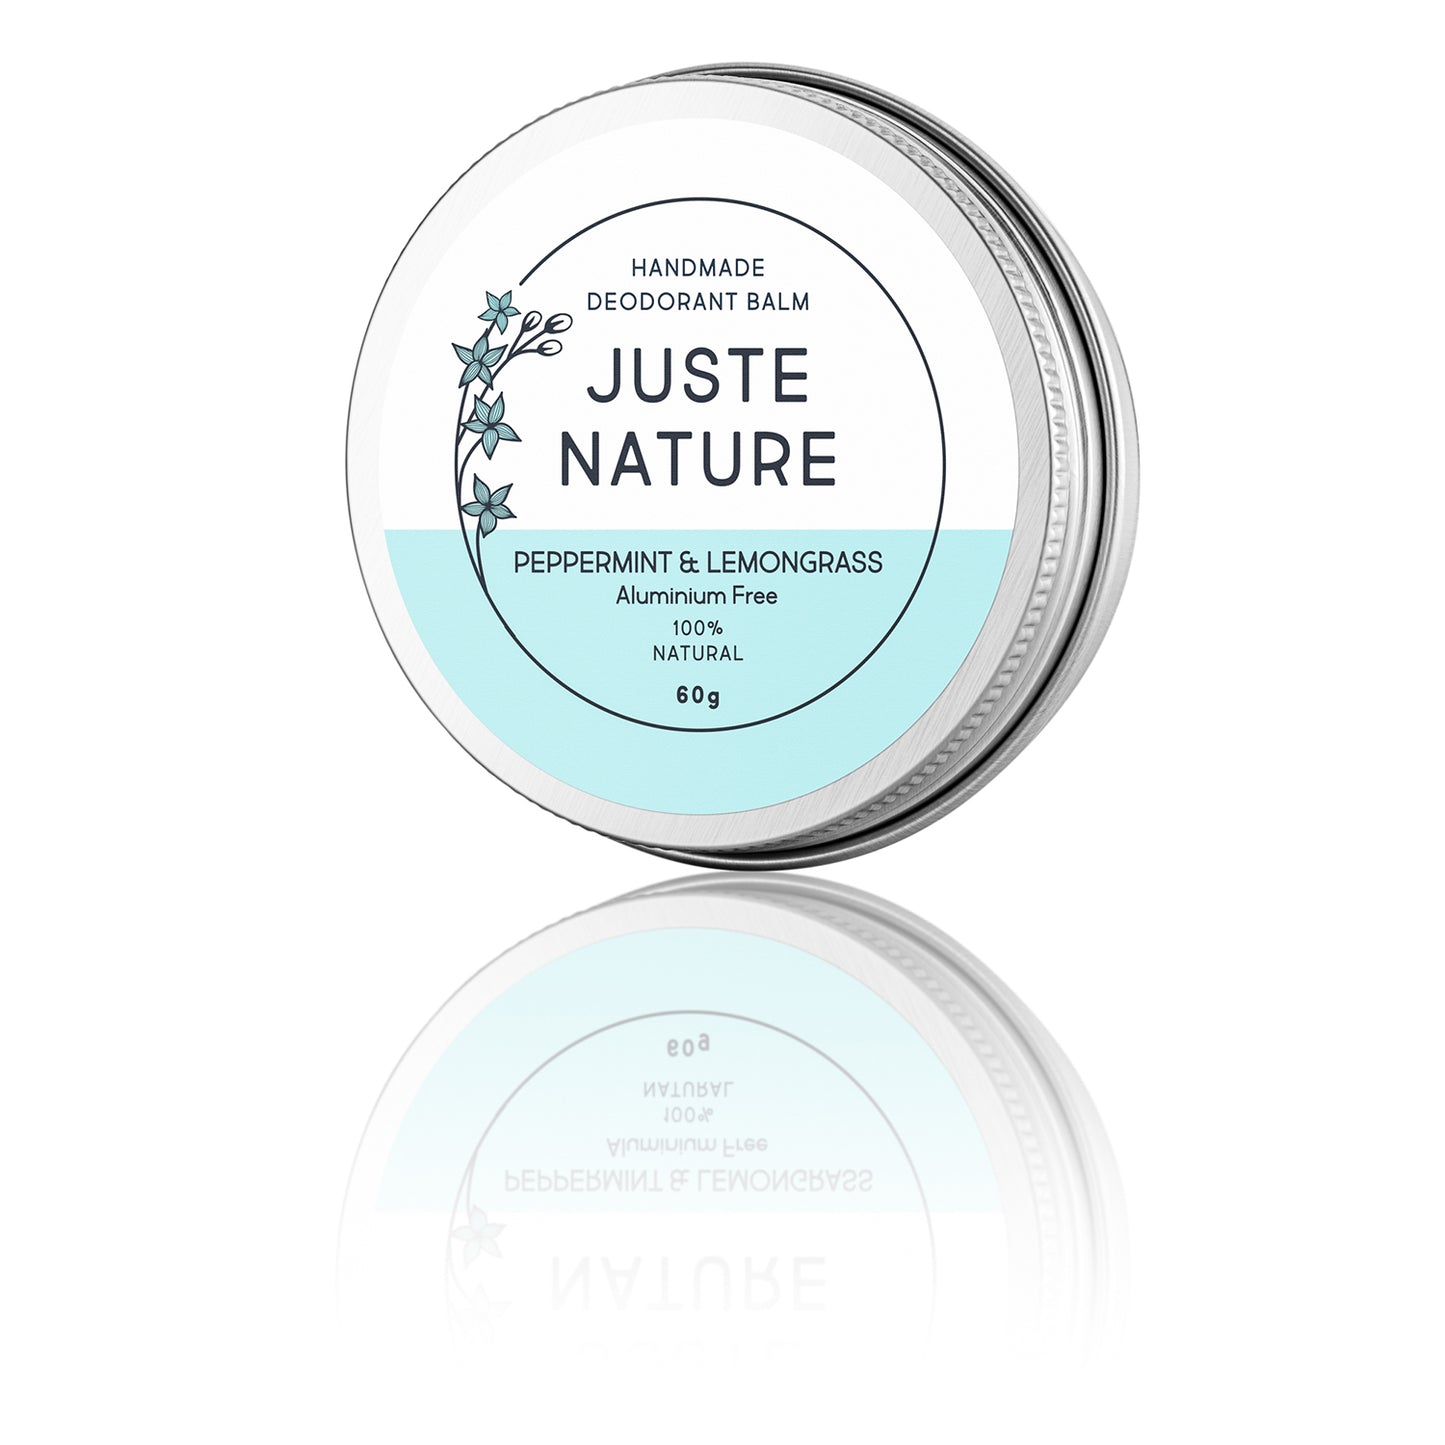 Juste Nature peppermint and lemongrass natural deodorant balm